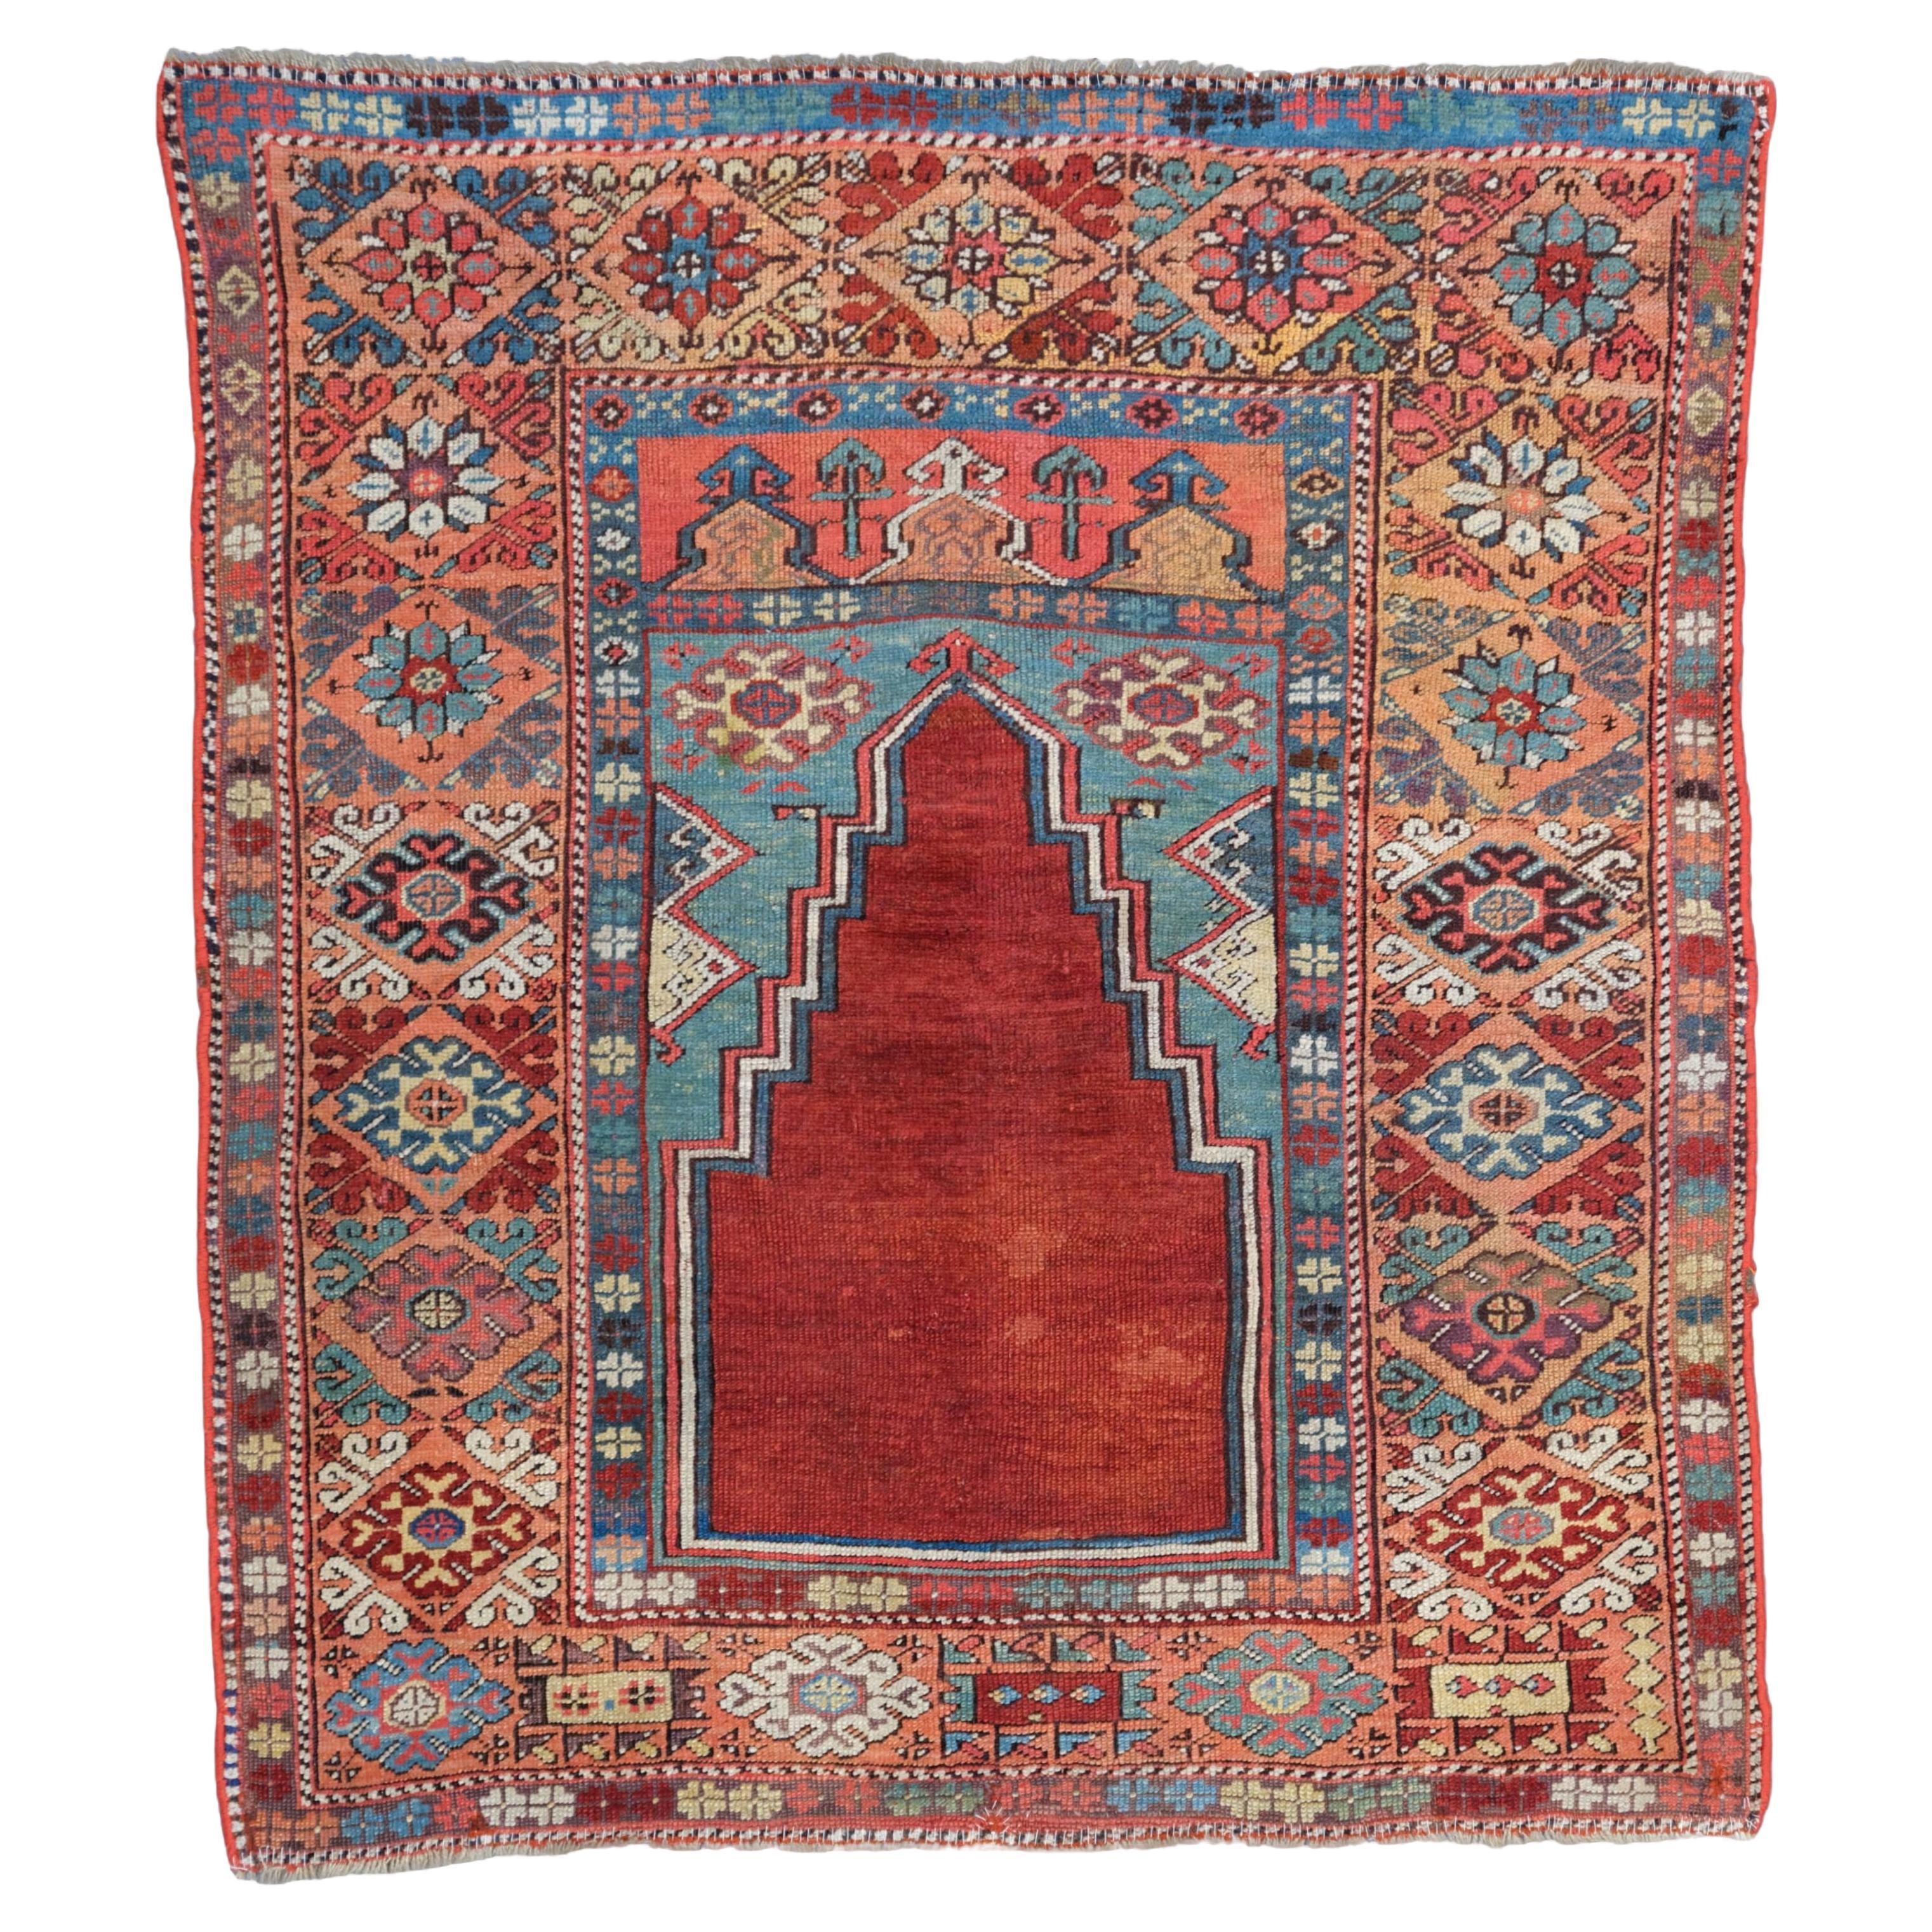 Antique Konya Rug - Middle of the 19th Century Central Konya Prayer Rug